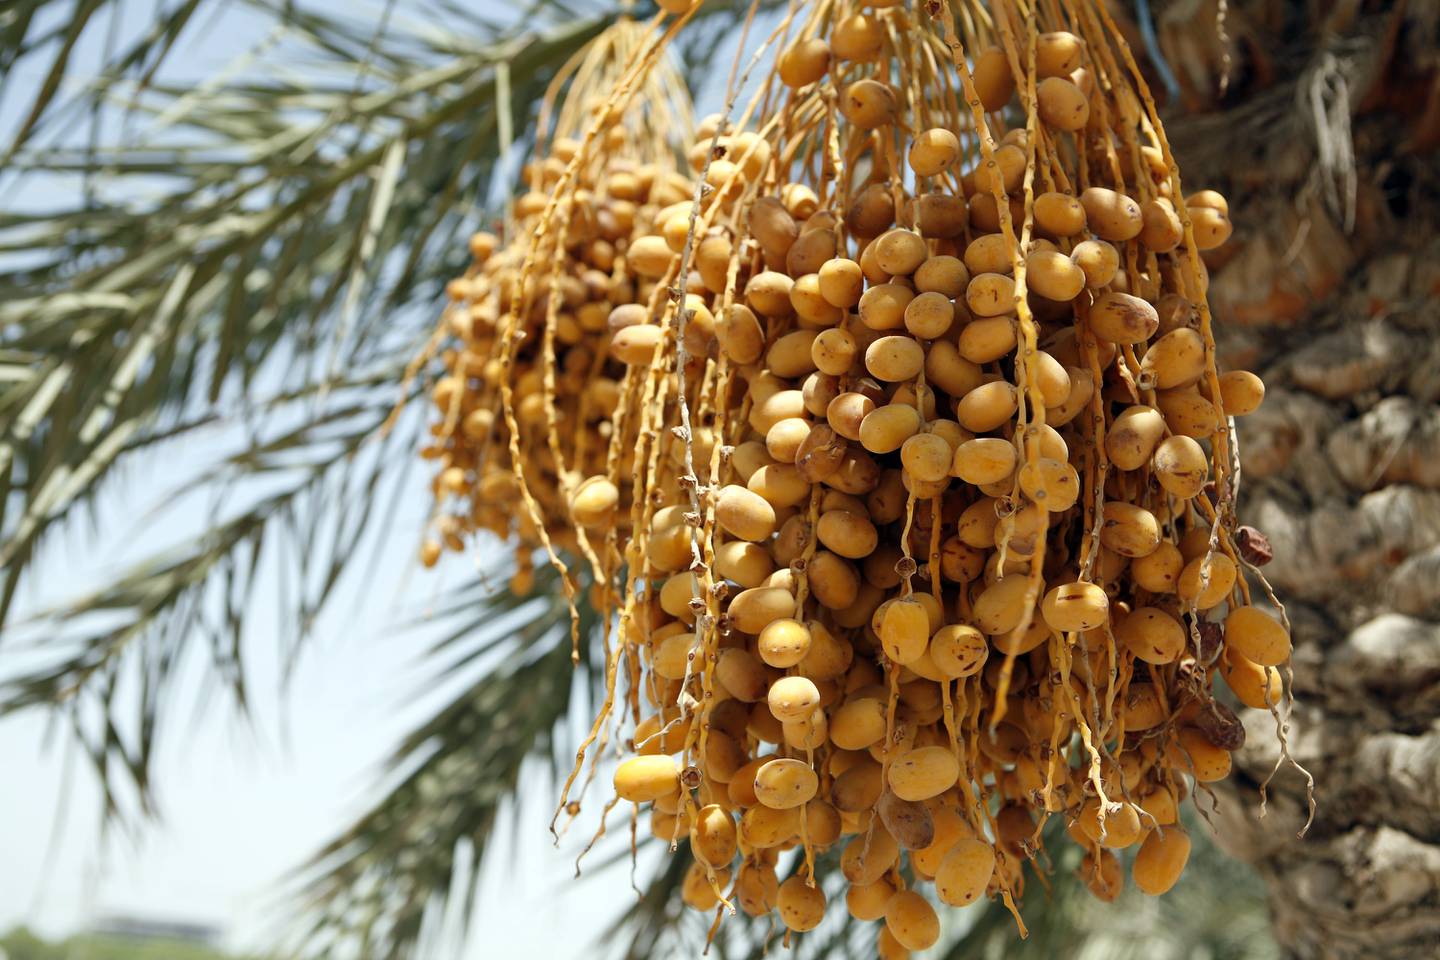 Abu Dhabi, United Arab Emirates, 27 June,2013:
Pictures of dates, Abu Dhabi.
Asmaa Al Hameli / The National